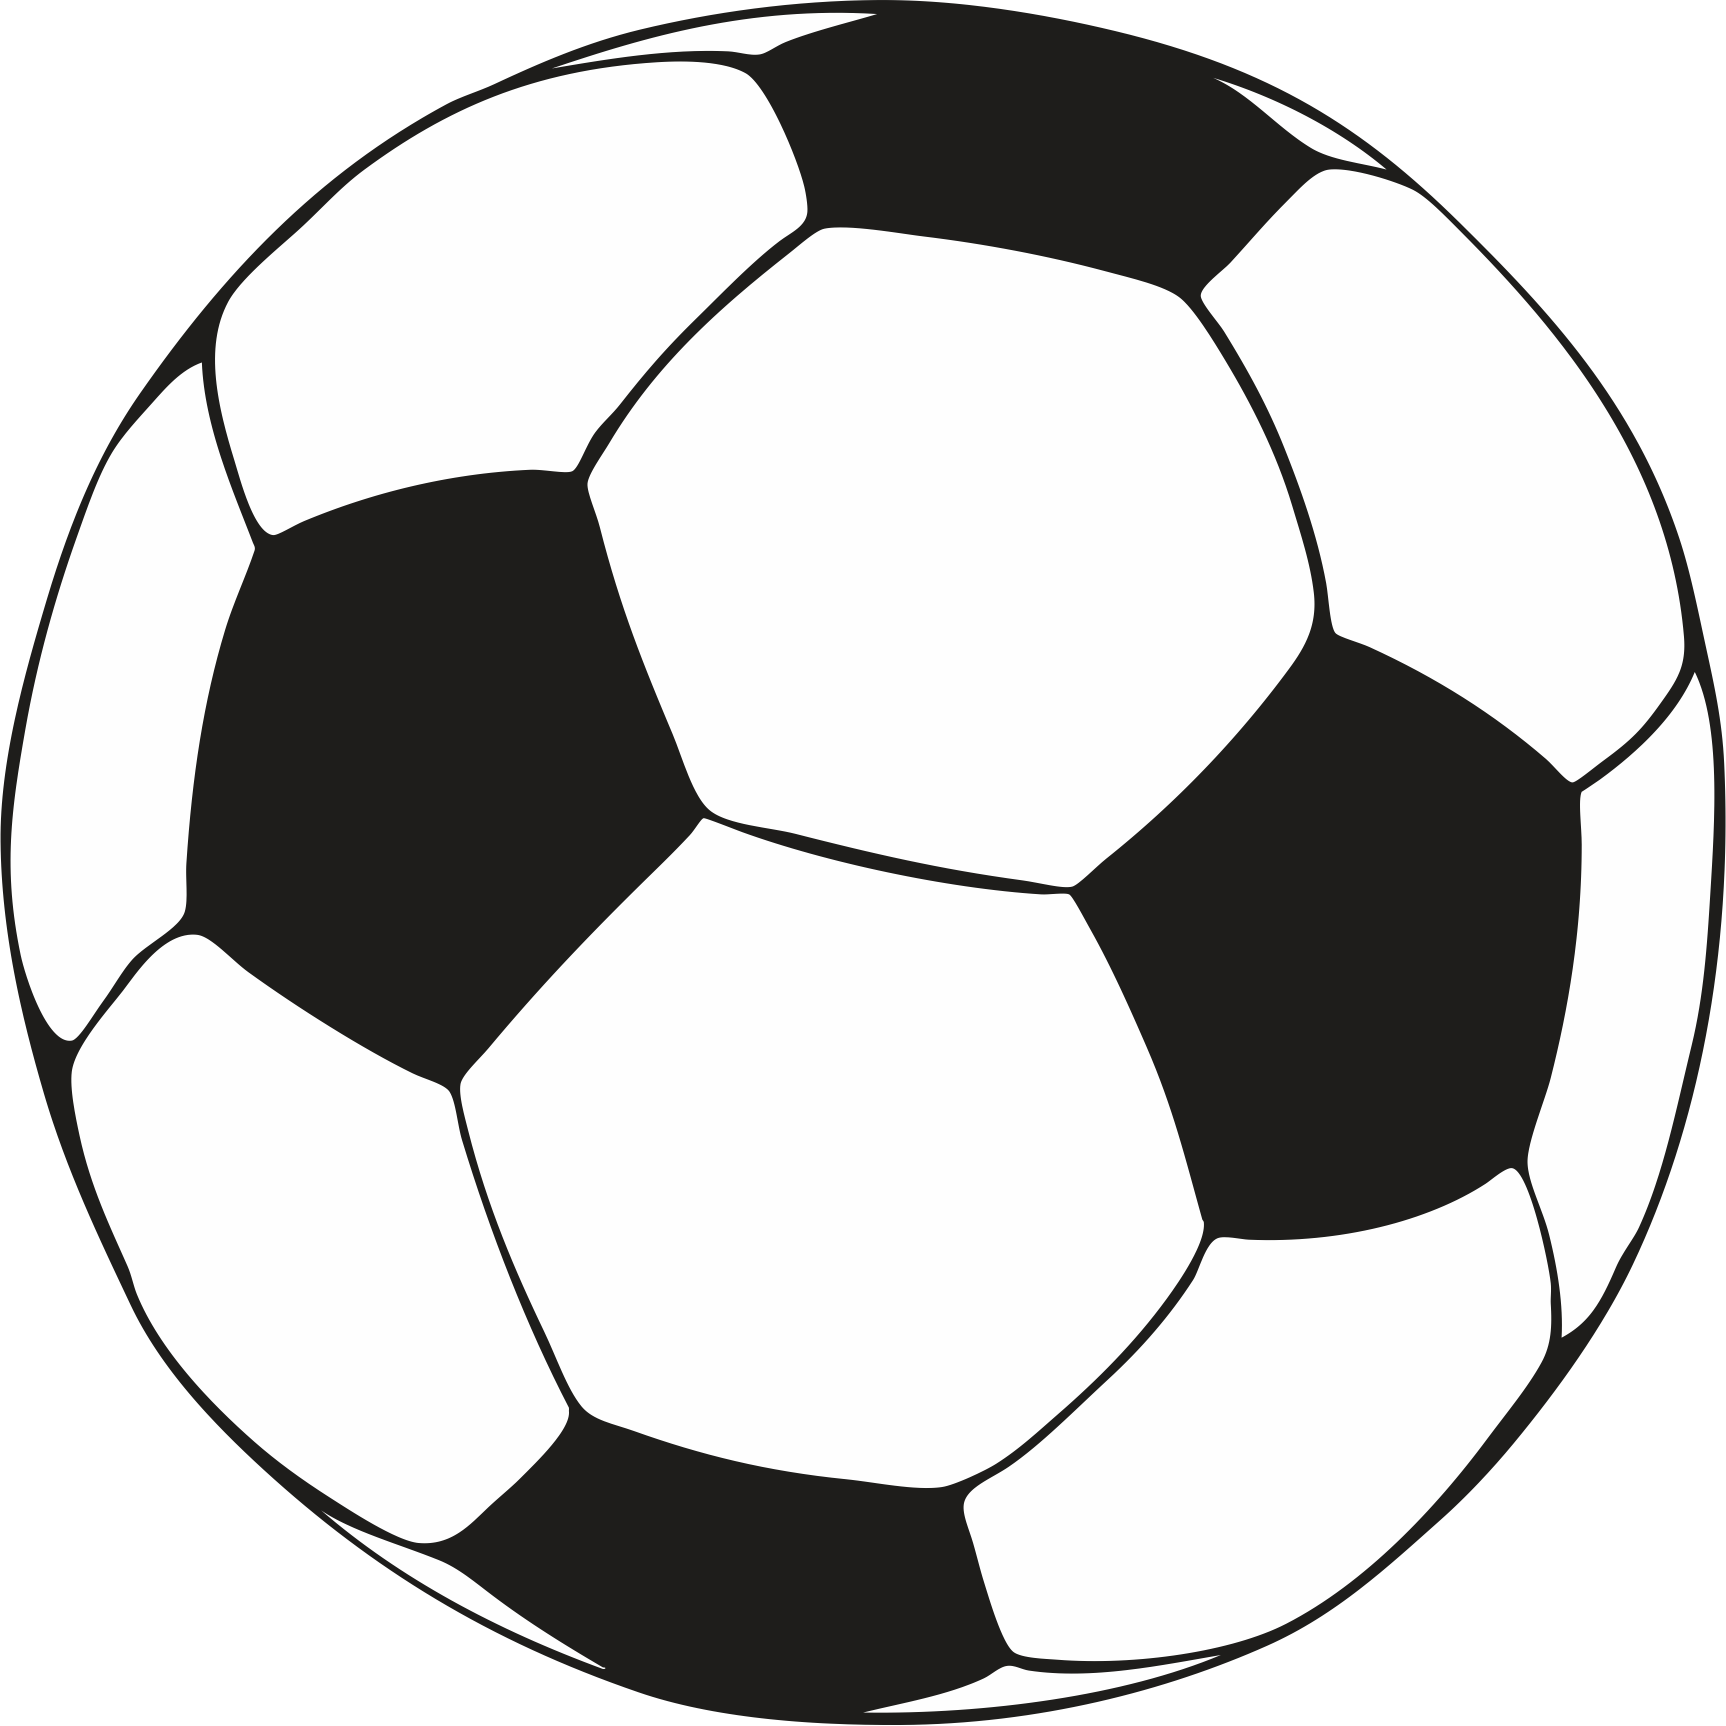 Soccer ball soccer clip art pictures image